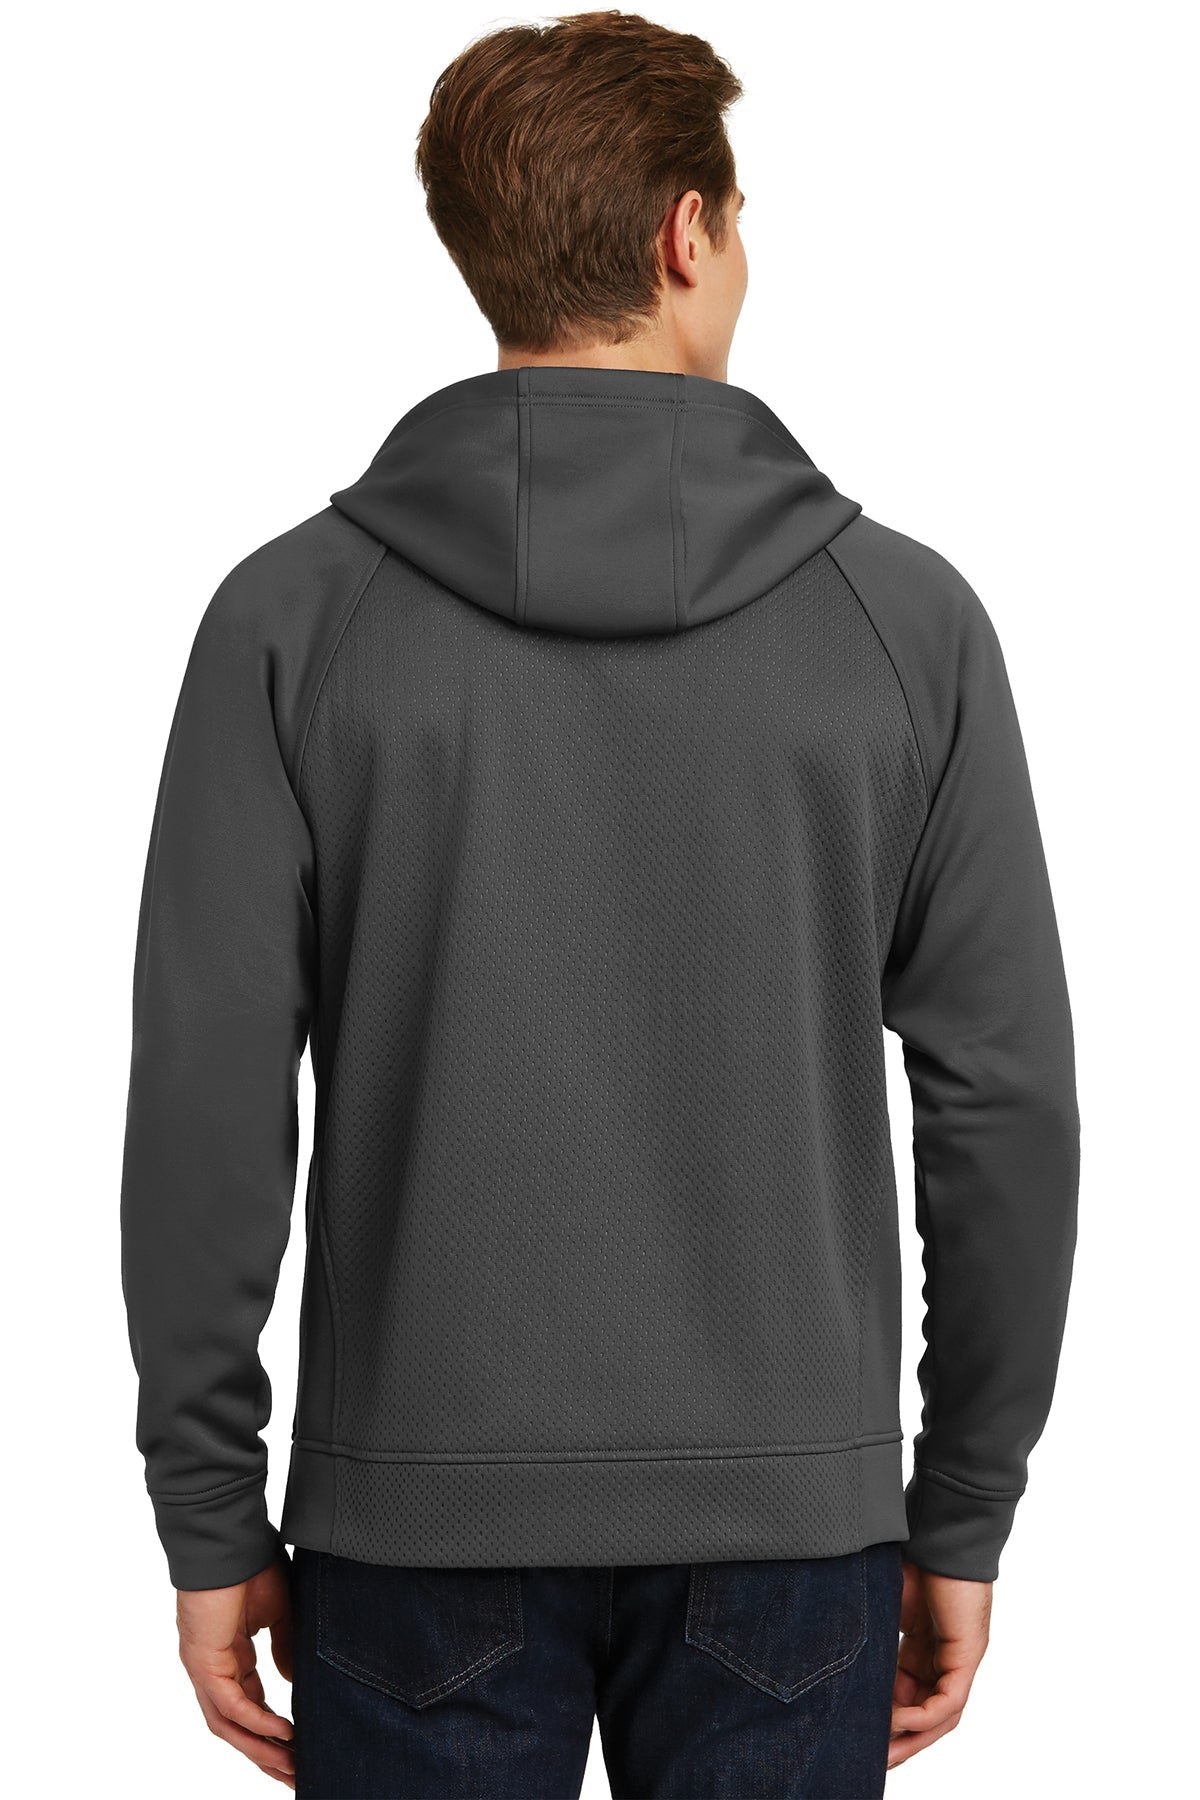 sport-tek_st295 _iron grey_company_logo_sweatshirts